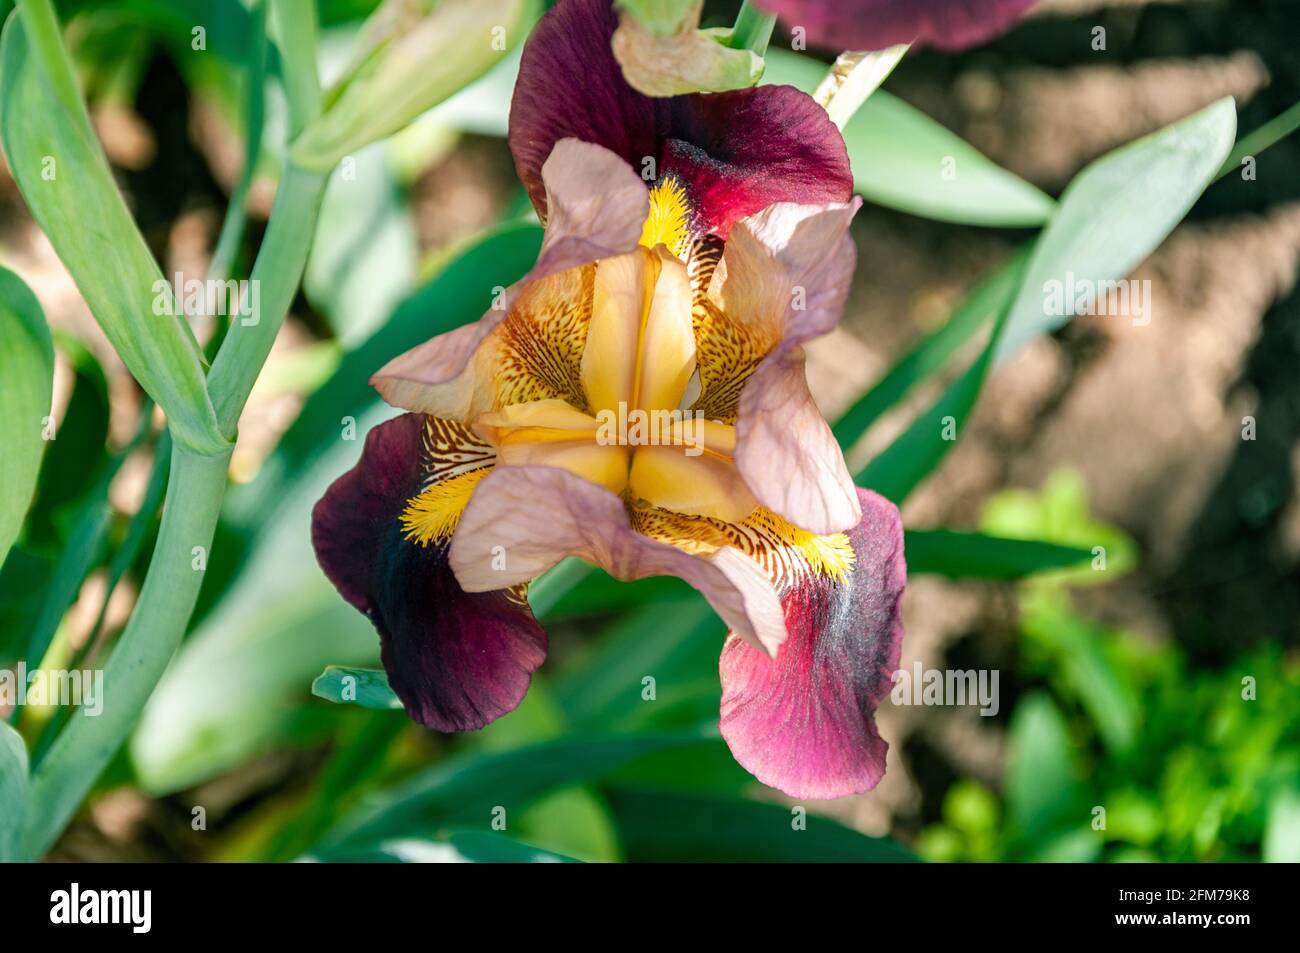 Close-up photo of Iris flower Iridaceae family. Blooming Iris Dark Purple Color Stock Photo